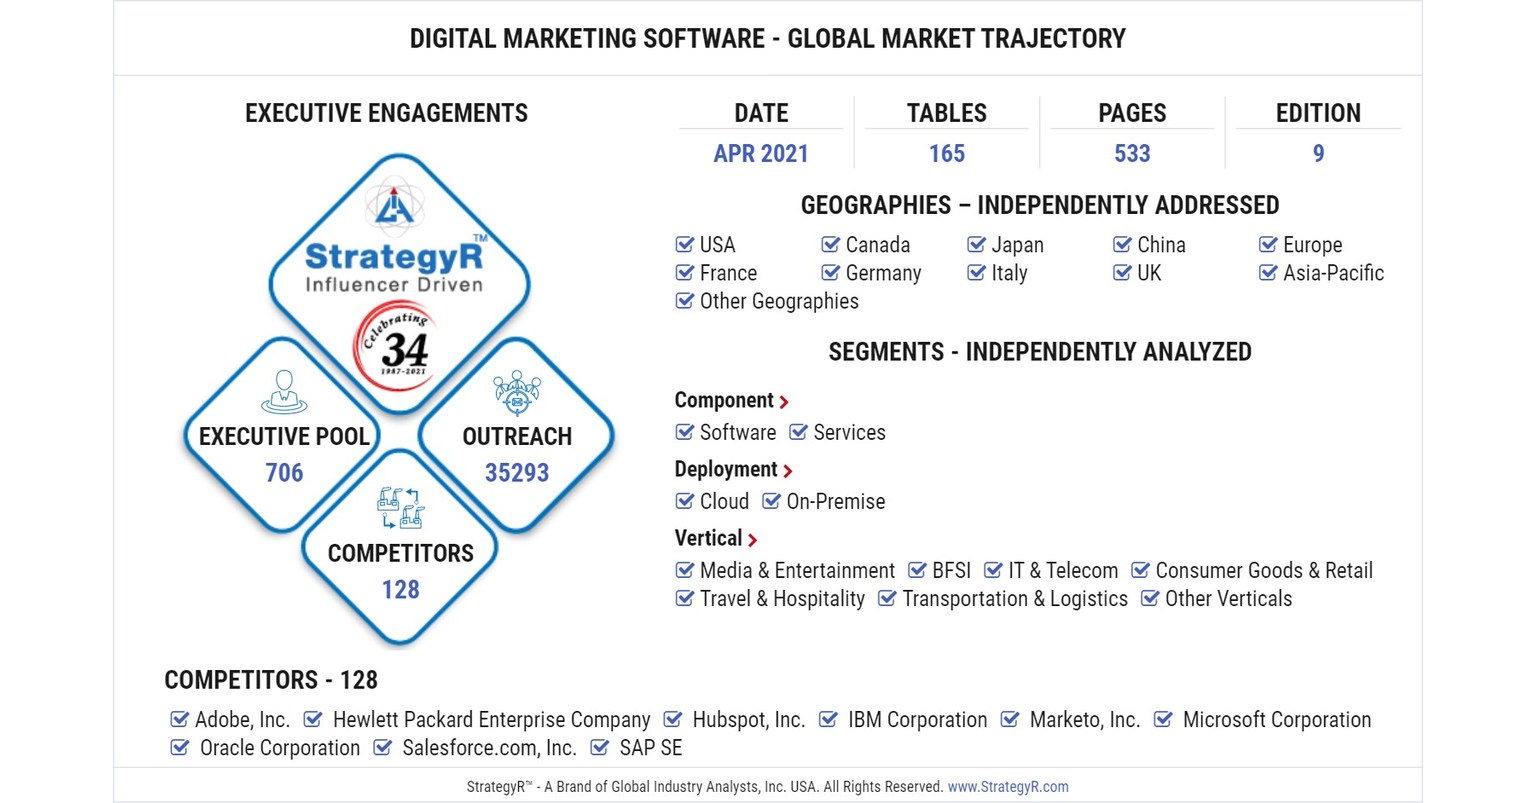 4.7 Target Market Selection – Global Marketing In a Digital World